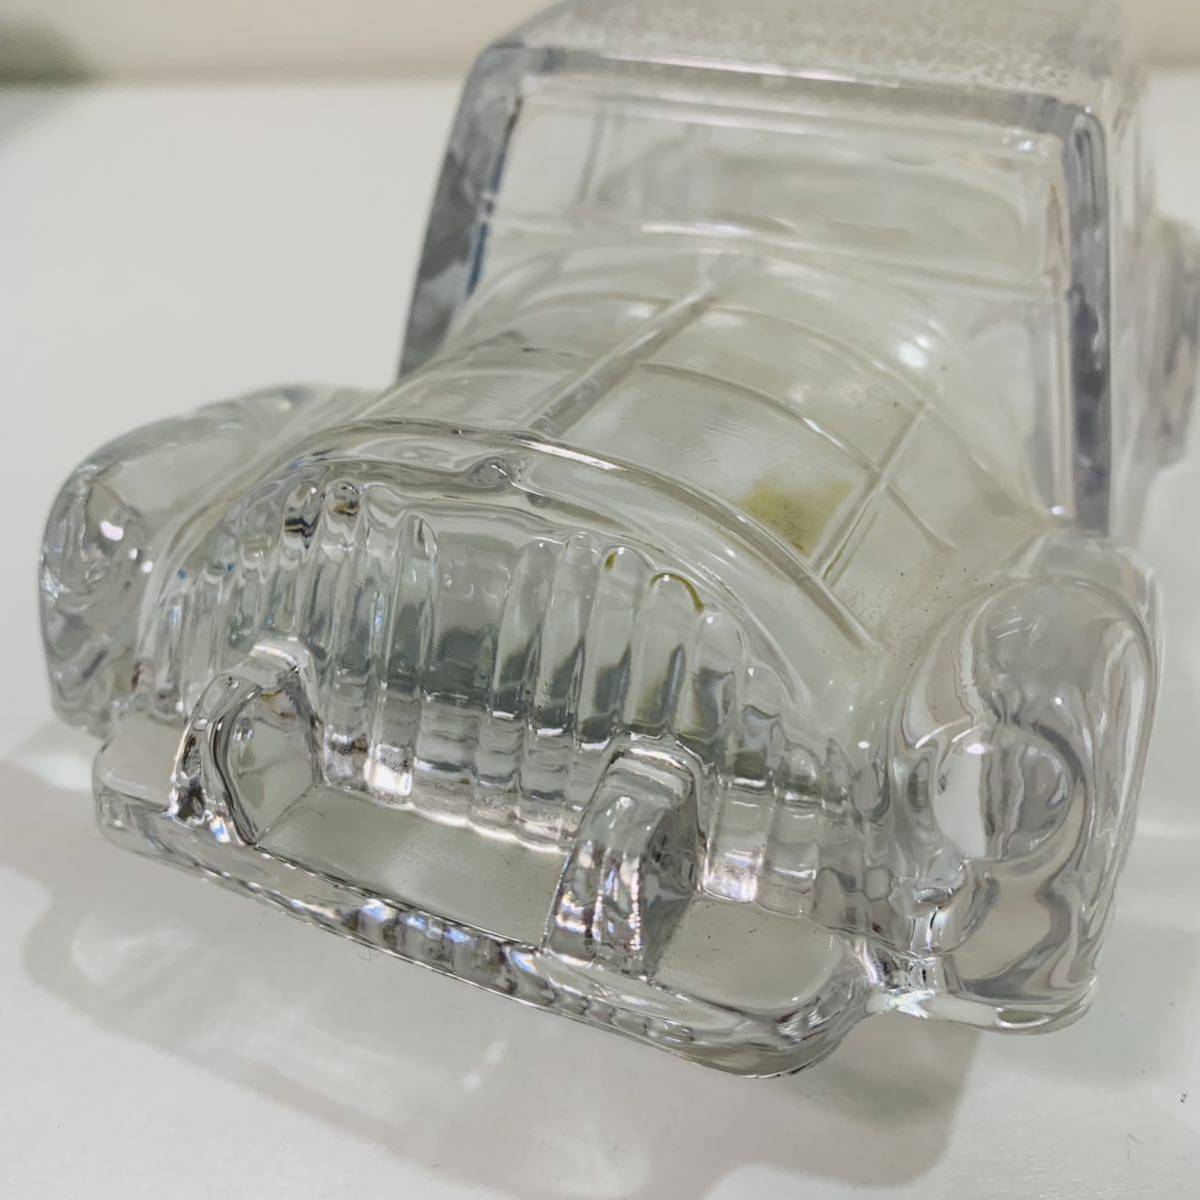 Etoile 日本製 車型 ガラス 小物入れ インテリア 置物 約20cmX10cmX8cm_画像7